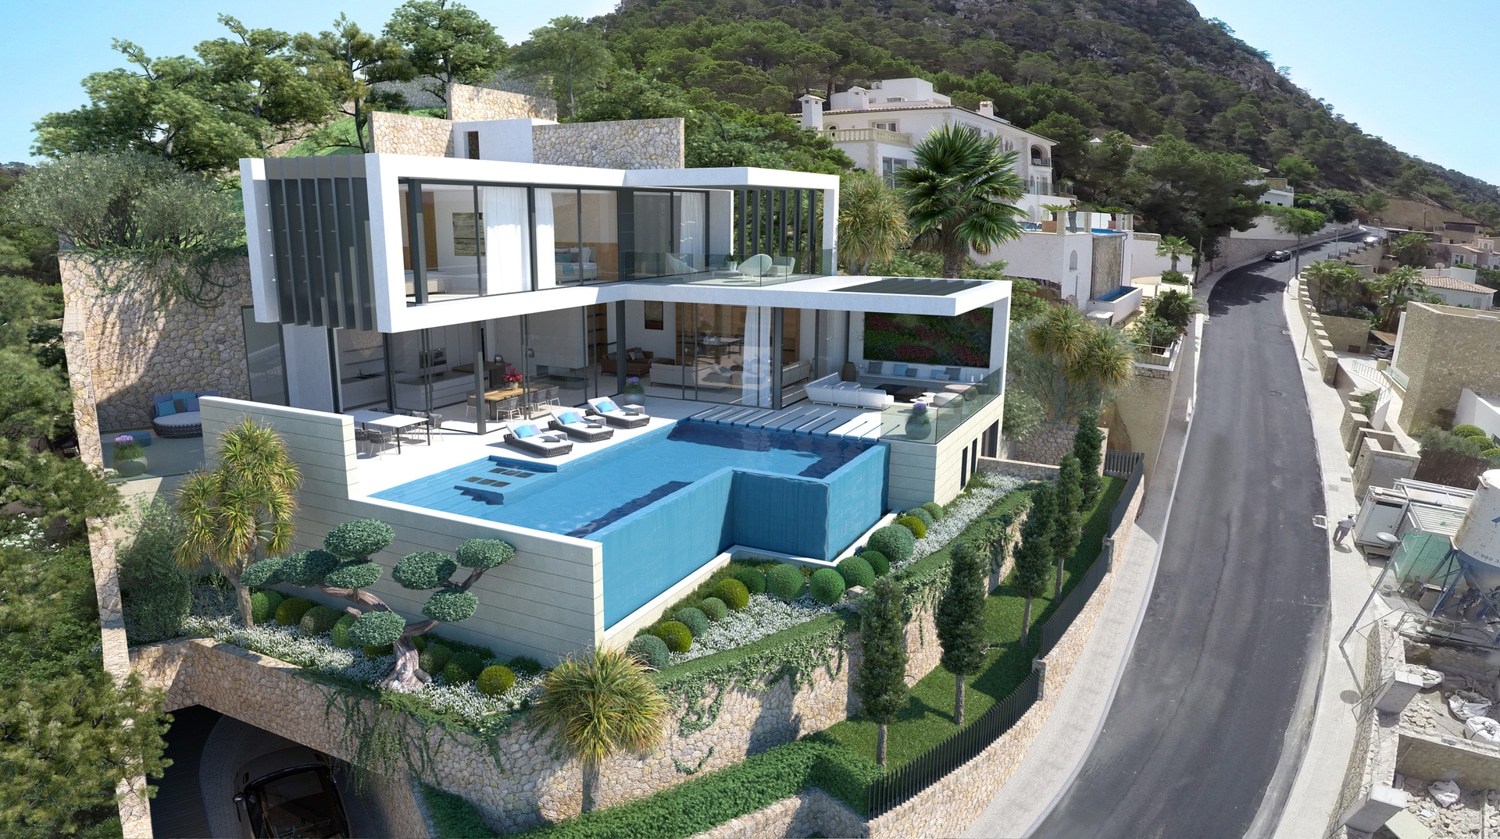 Exquisite Villa in Port Andratx Unparalleled seaviews await in this breathtaking coastal haven